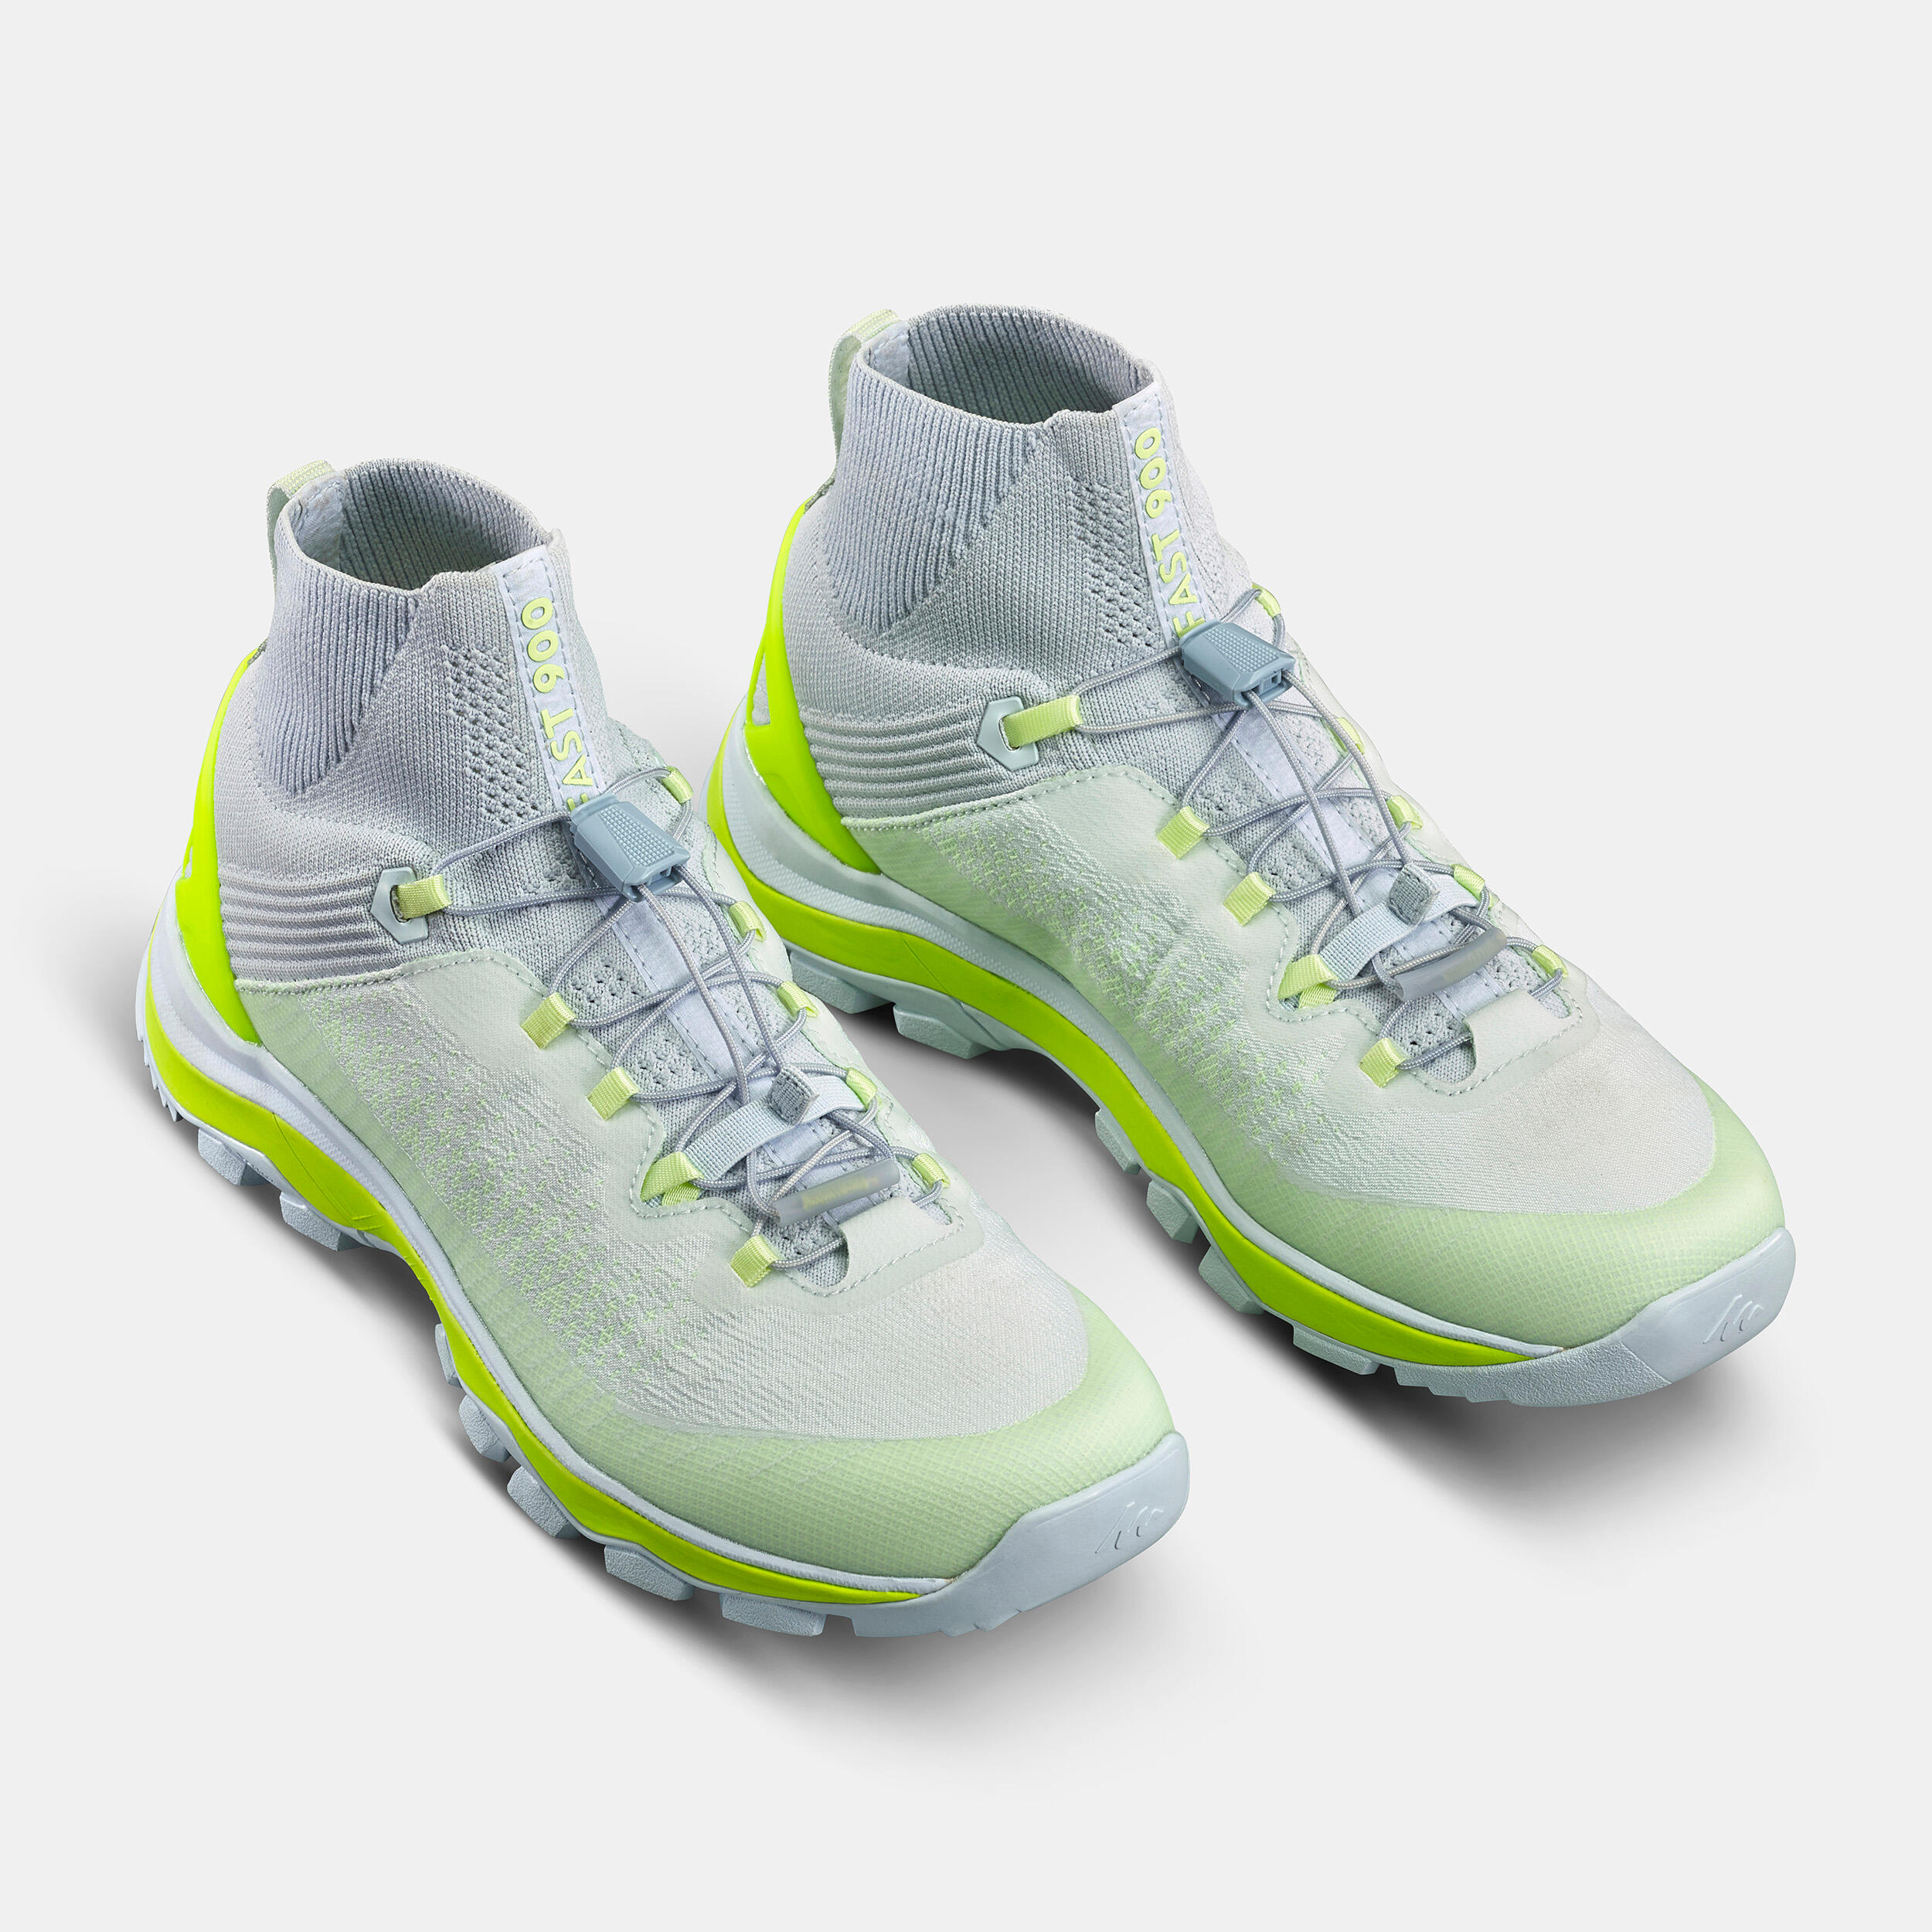 Women’s ultralight fast hiking shoes FH 900 grey yellow. 5/6